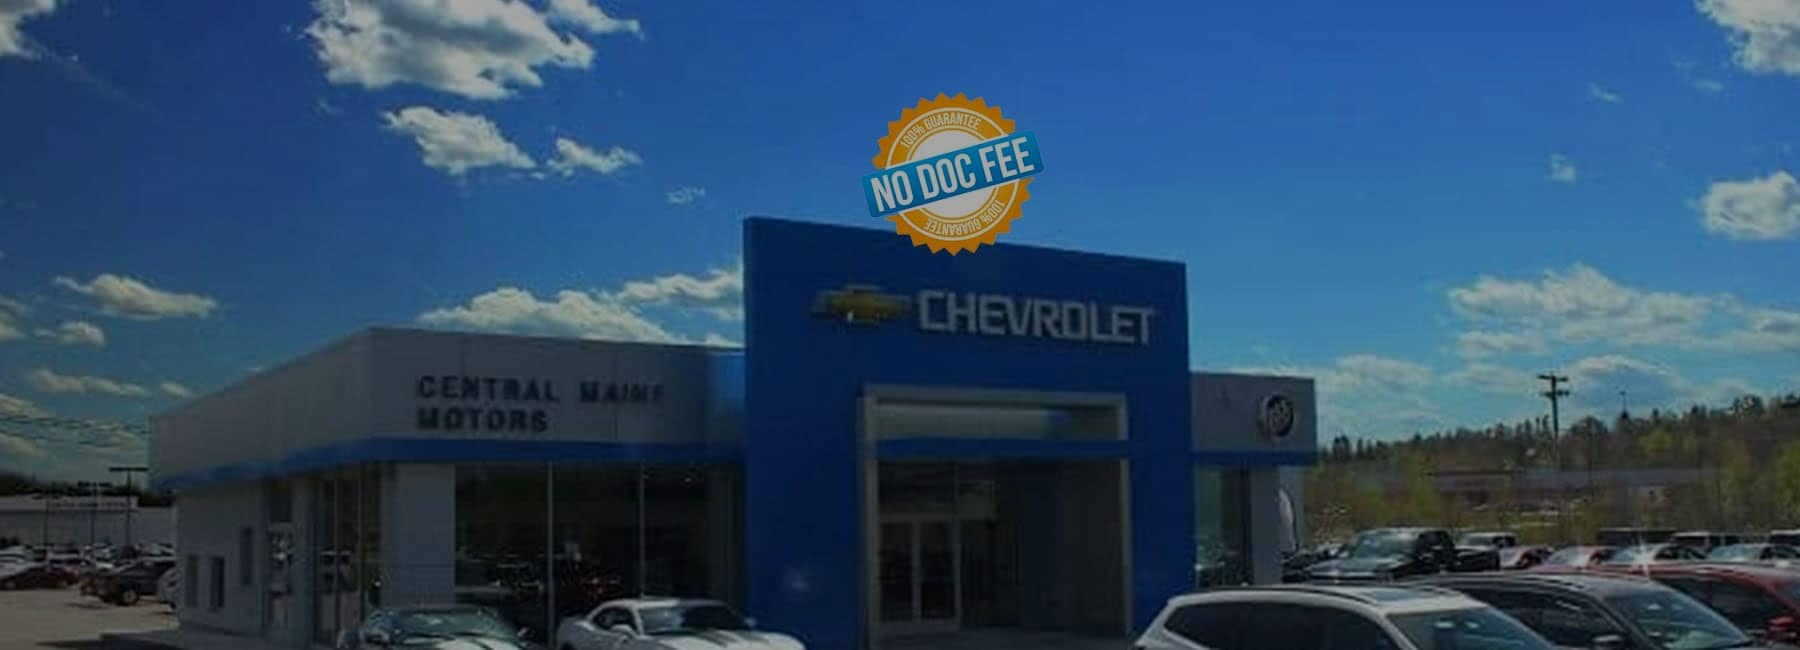 Central Maine Motors Chevrolet Buick storefront